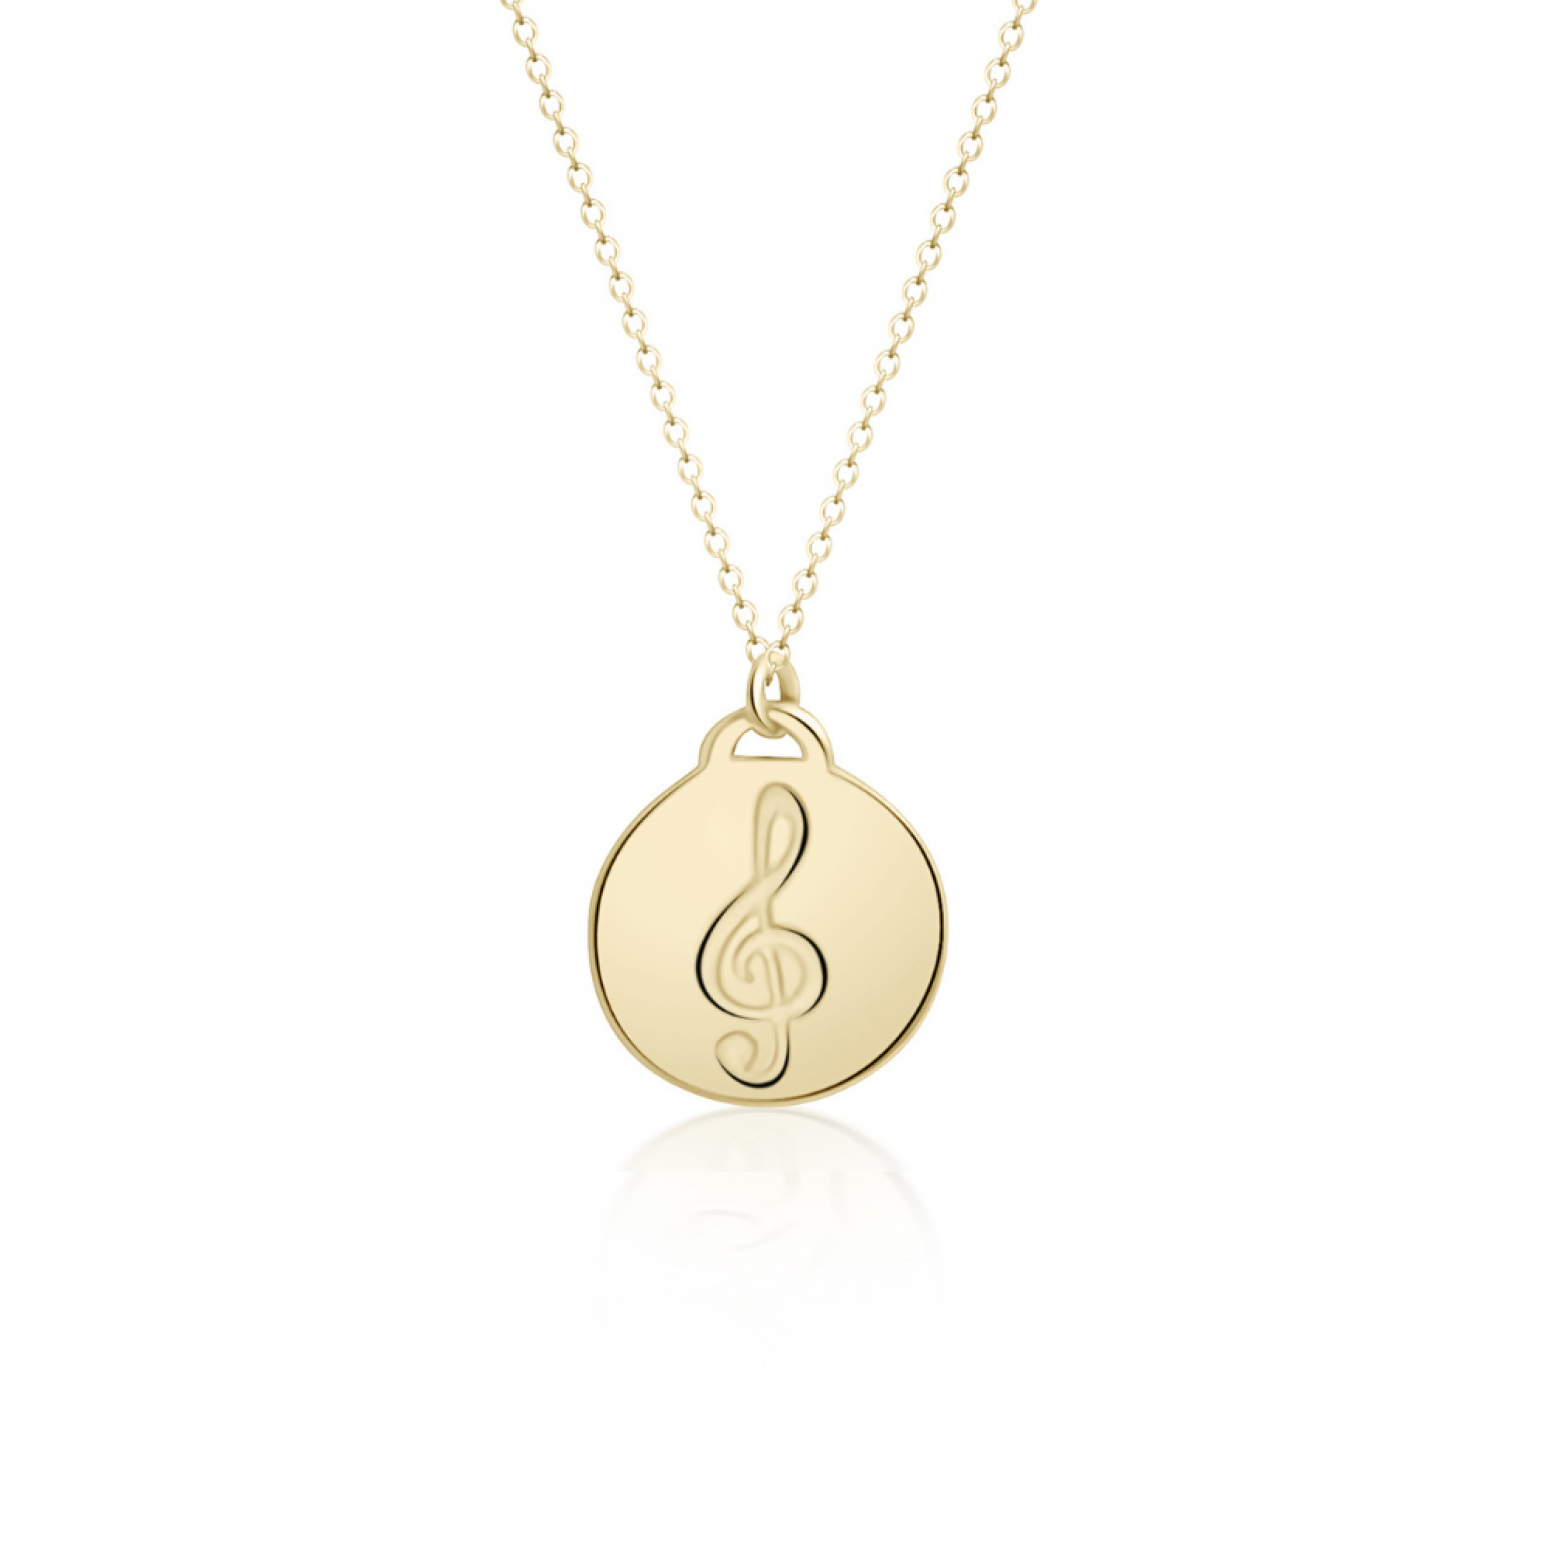 Round necklace, Κ14 gold with treble clef, ko4984 NECKLACES Κοσμηματα - chrilia.gr